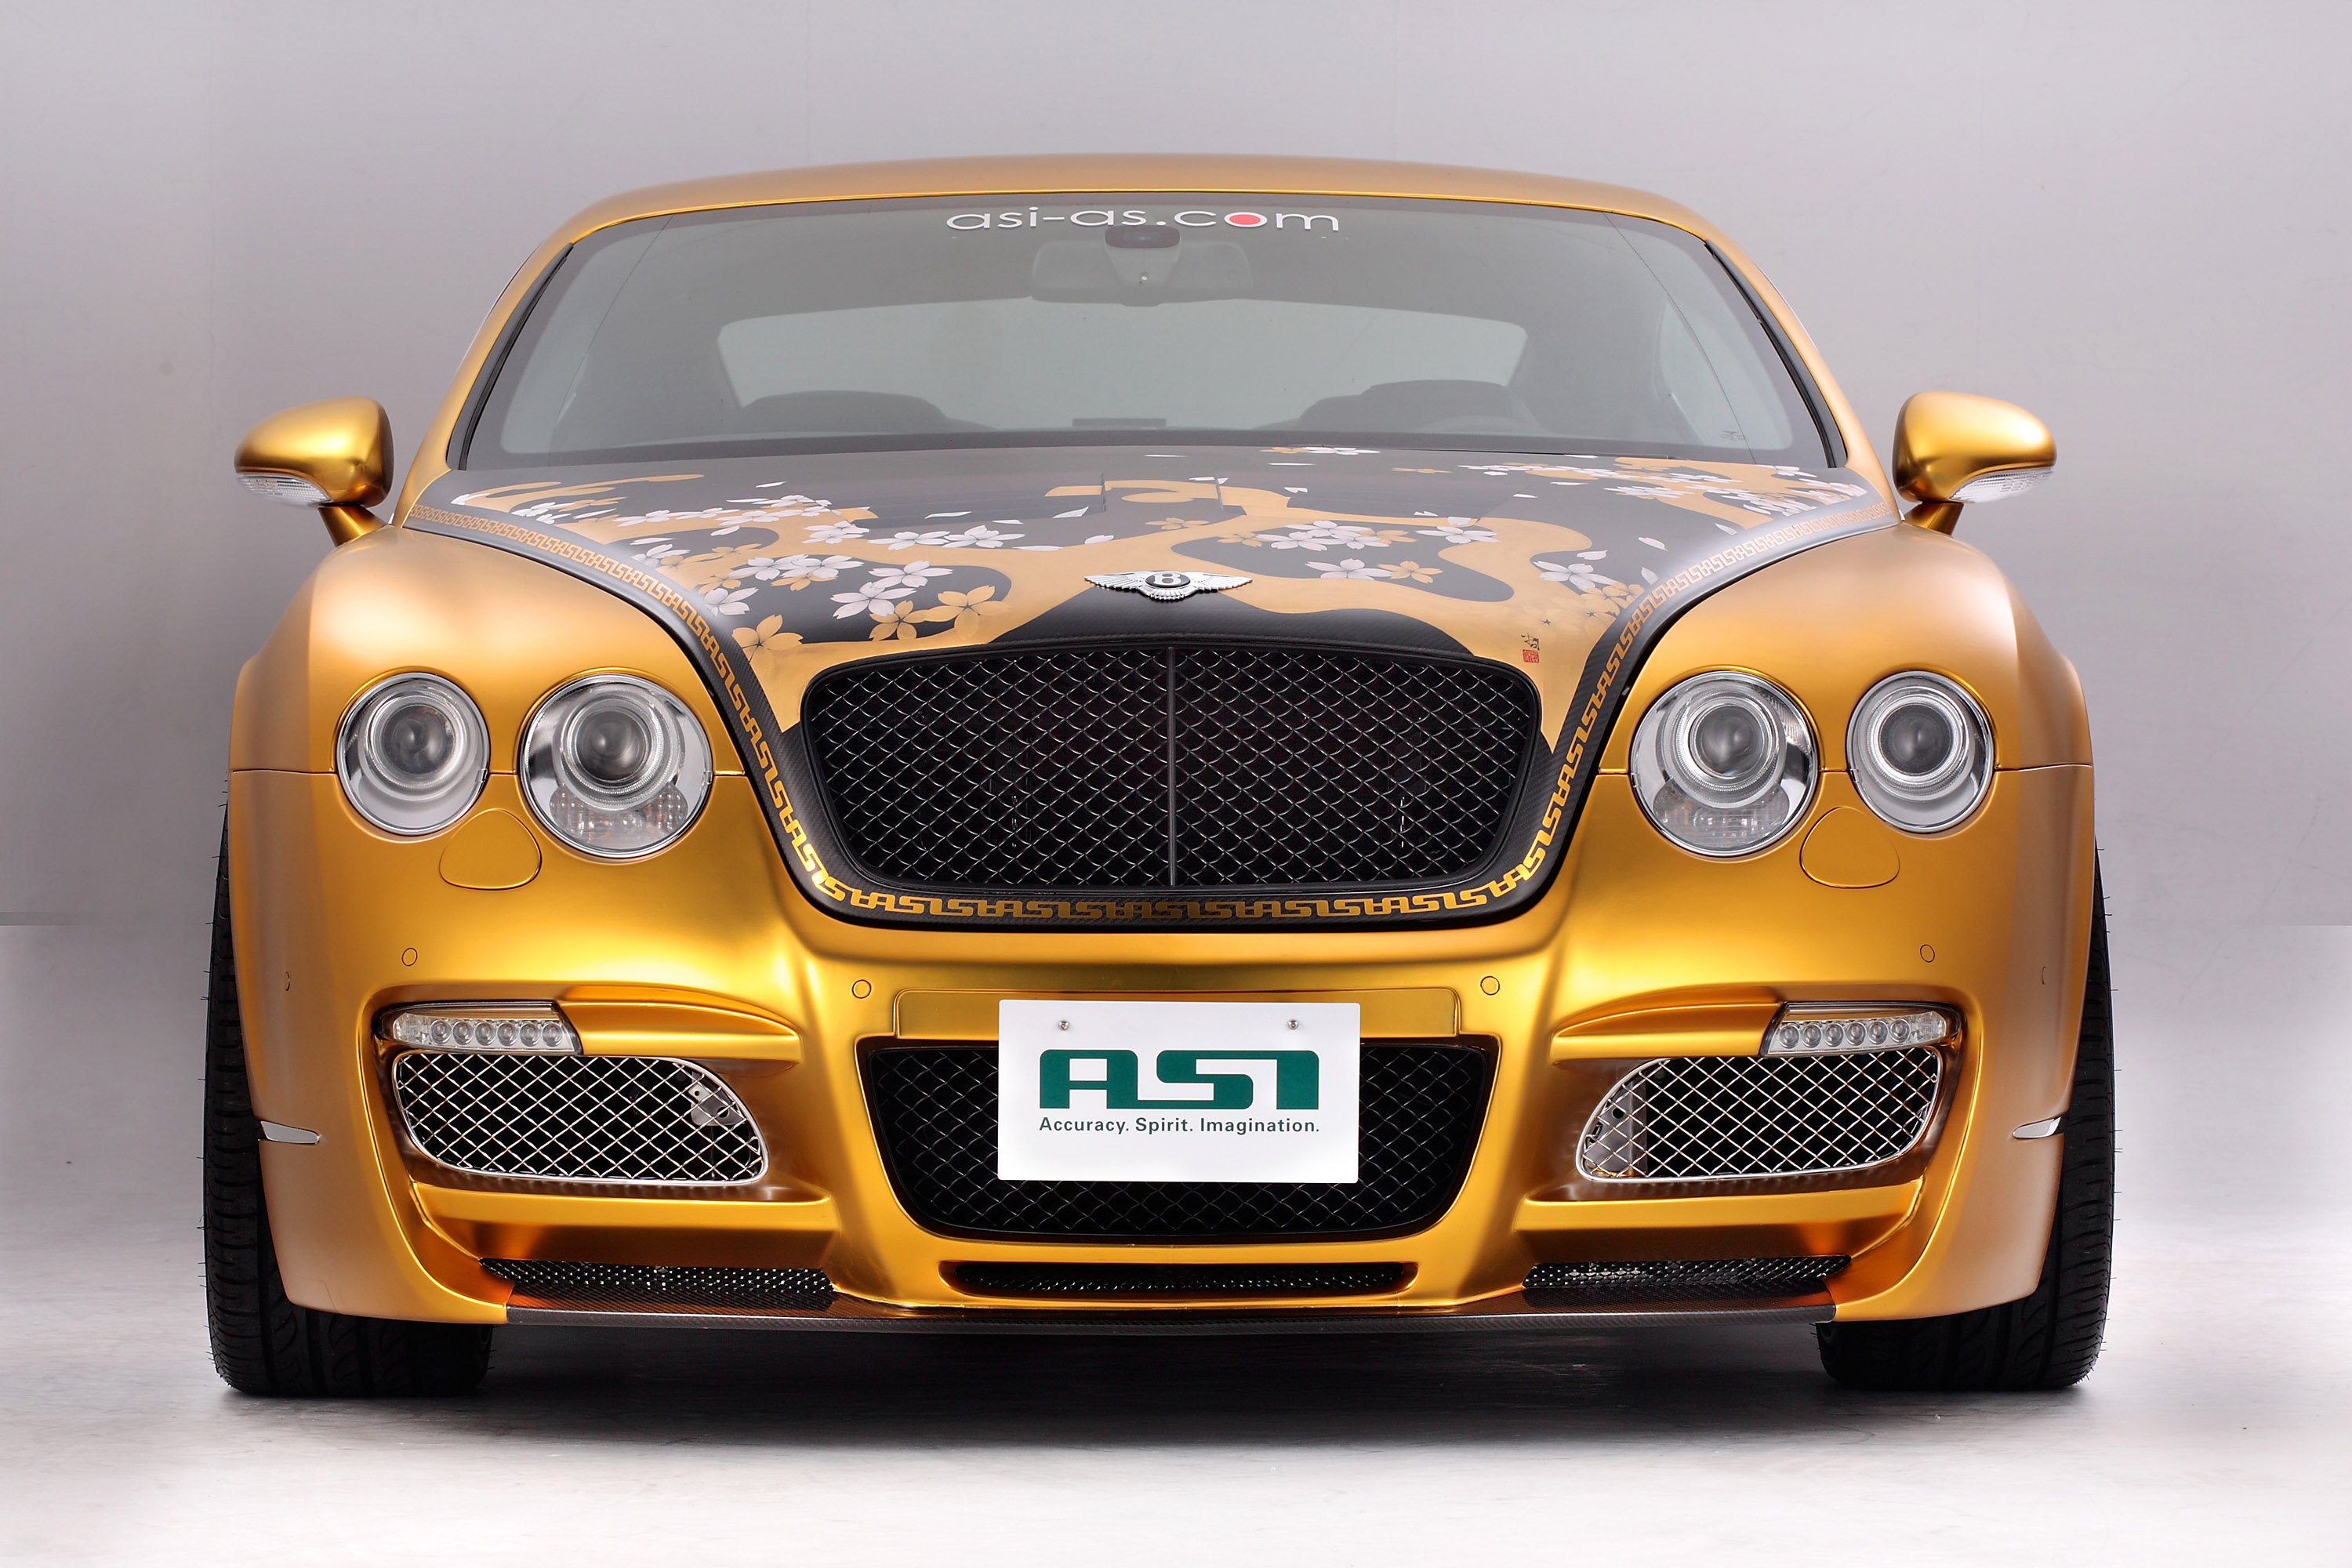 Gold машины. Бентли gt Continental золотой. Bentley Continental gt 2008. Bentley Continental gt золотой. Бентли Континенталь GTS.